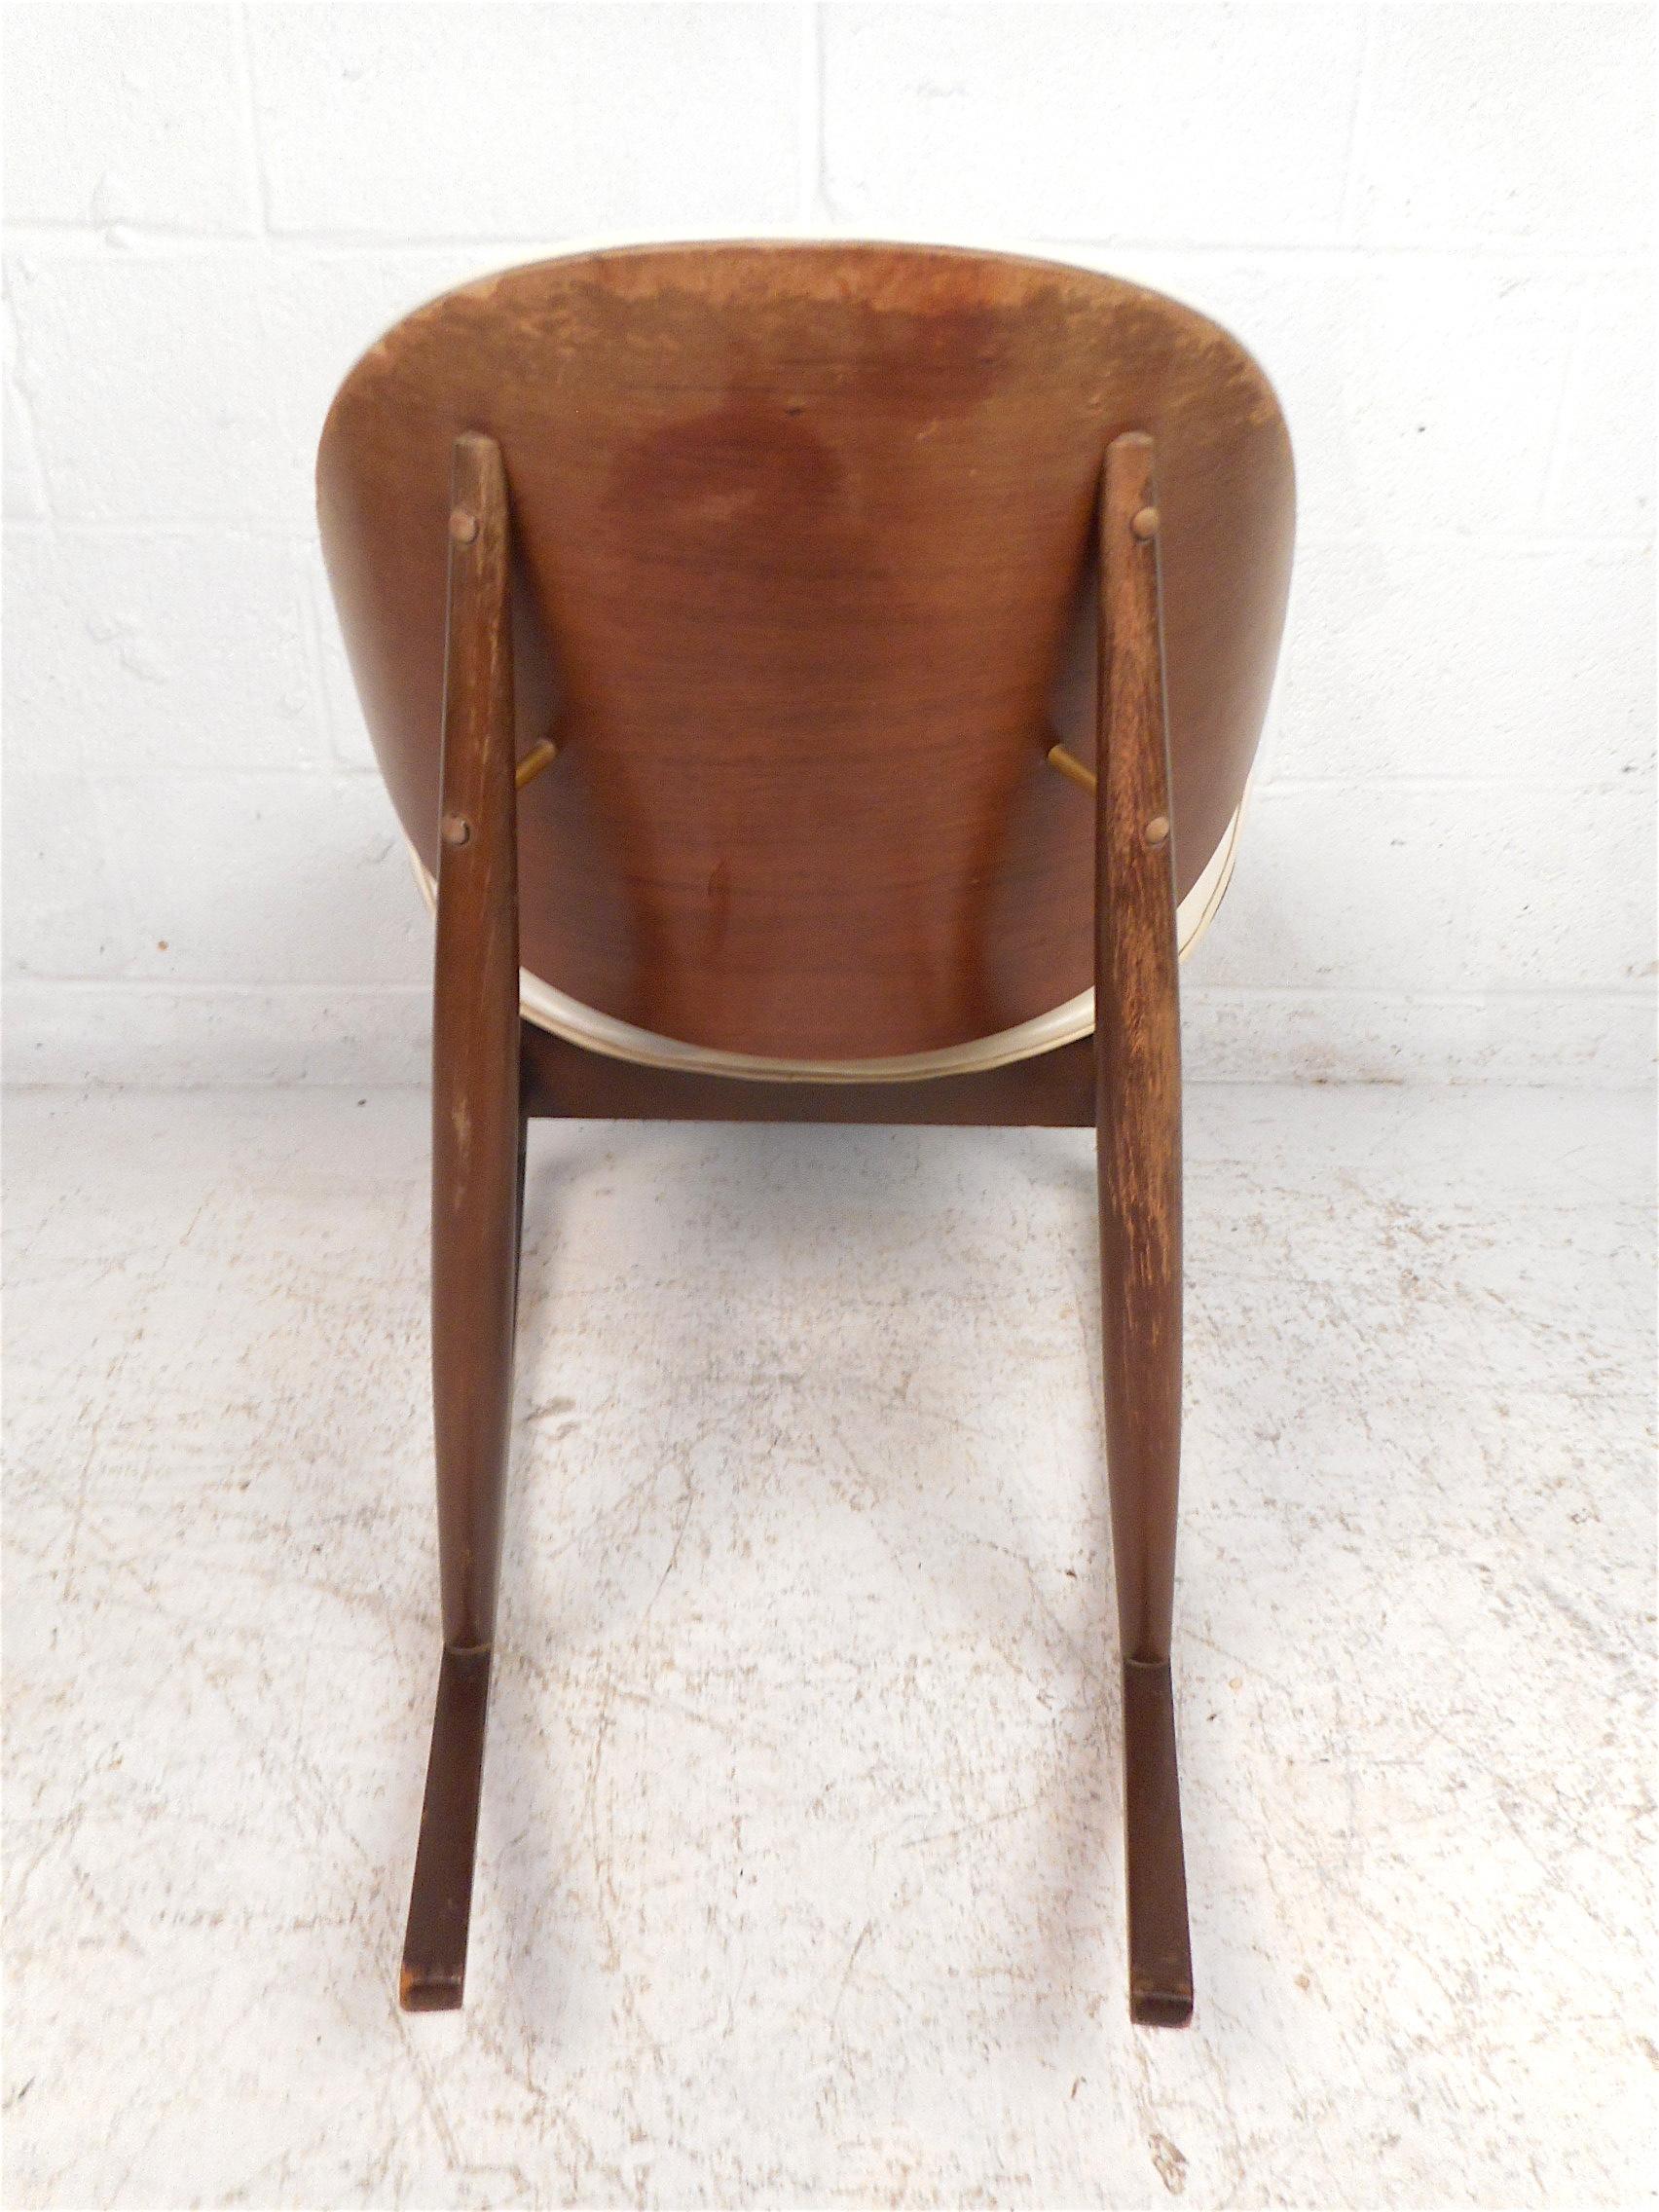 Mid-Century Modern Midcentury Rocking Chair by Kodawood Furniture